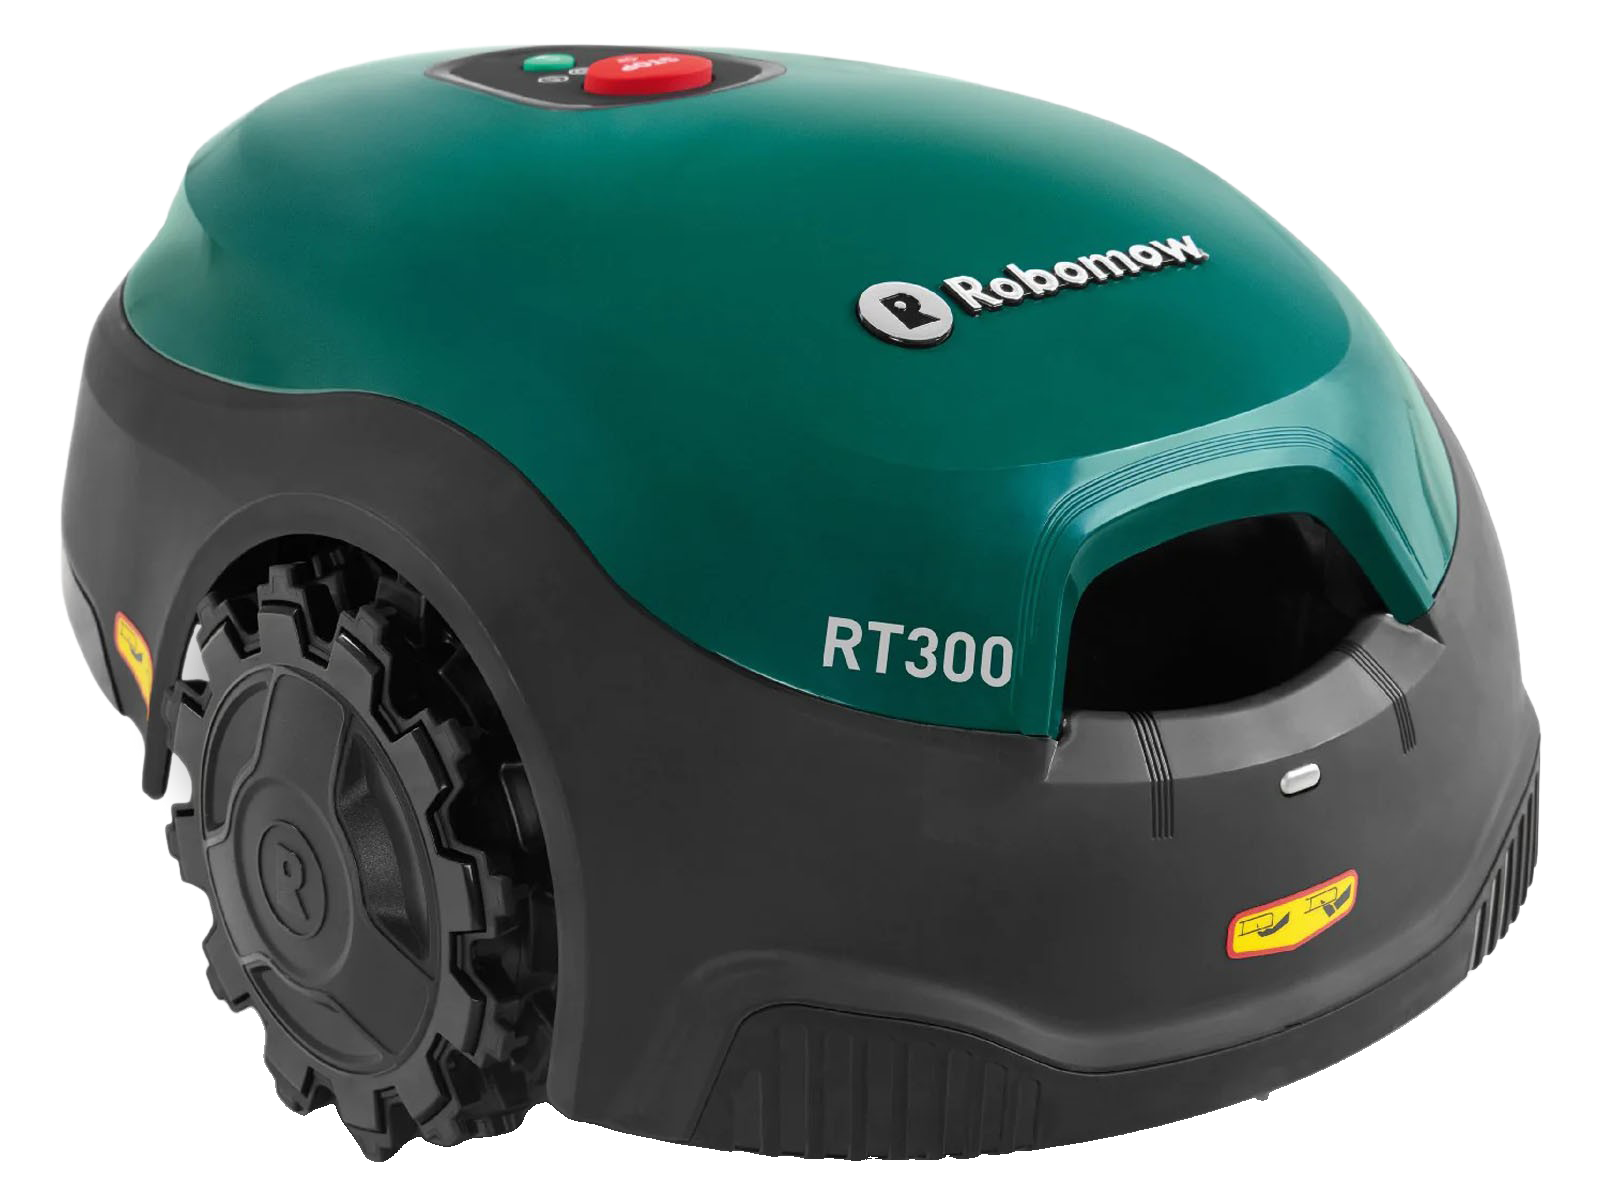 robomow-rt300-mahroboter